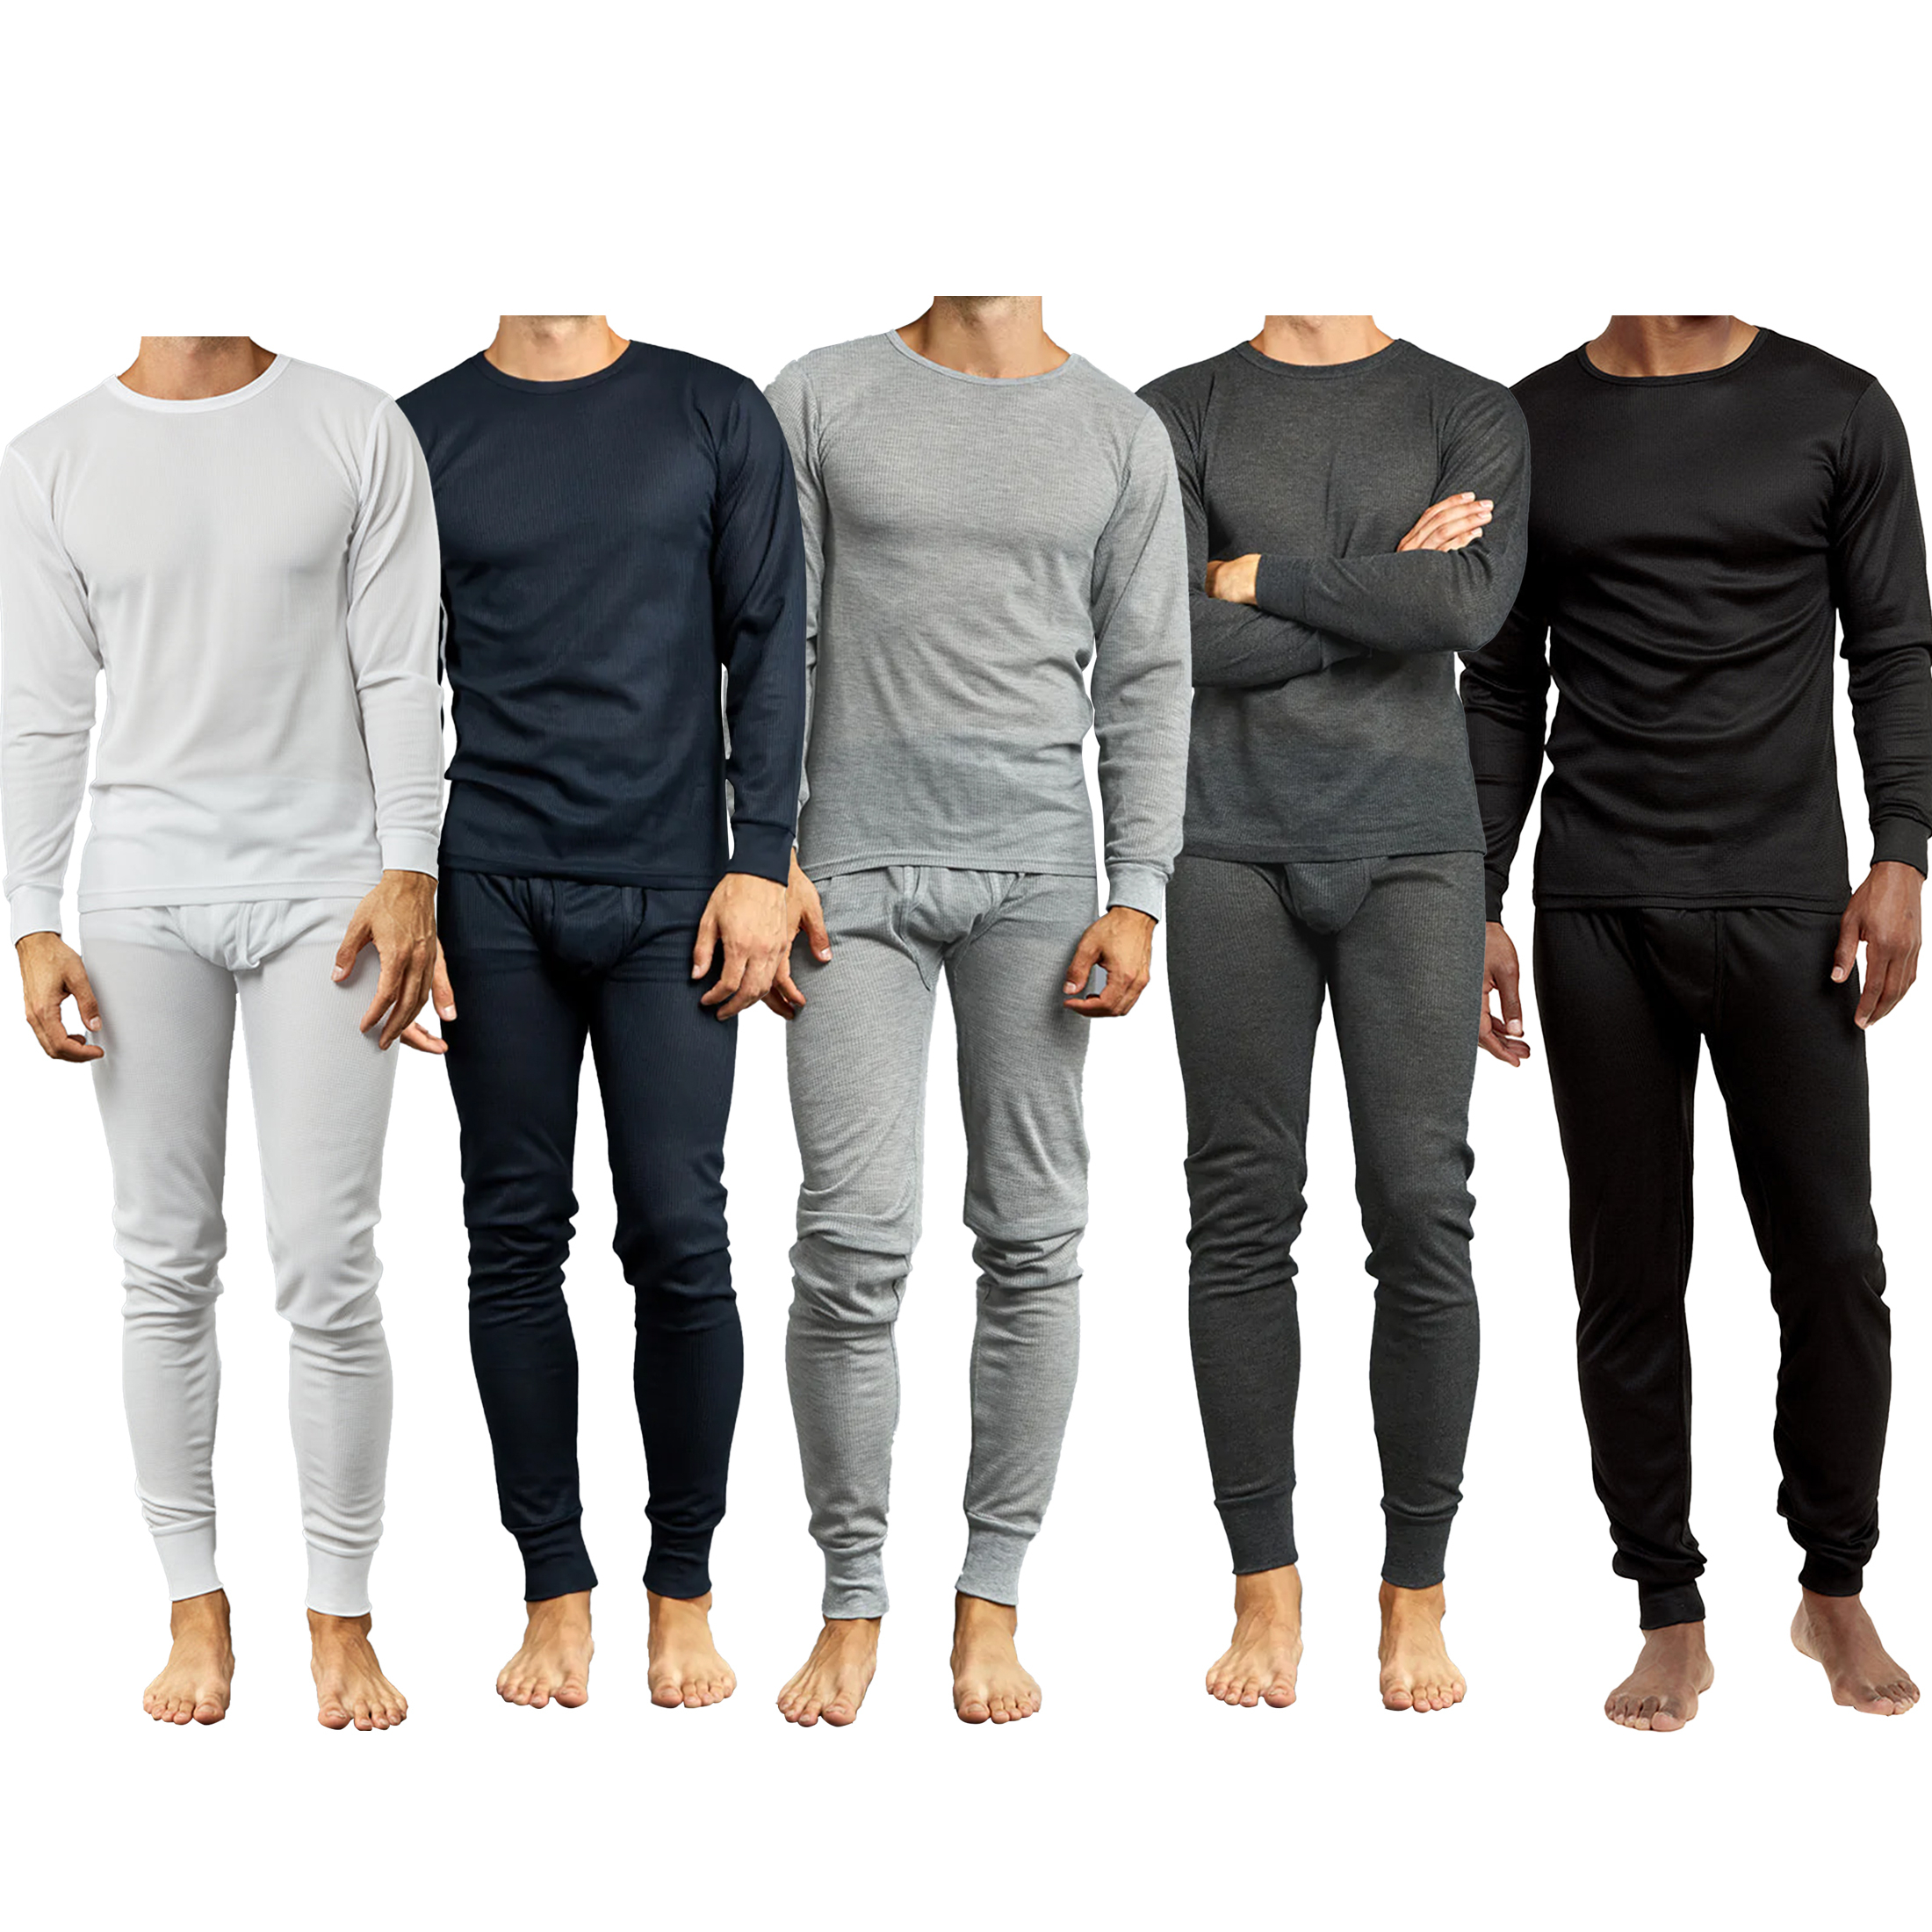 2-Piece: Men's Moisture Wicking Long Johns Base Layer Thermal Underwear Set (Top & Bottom) - White, Large